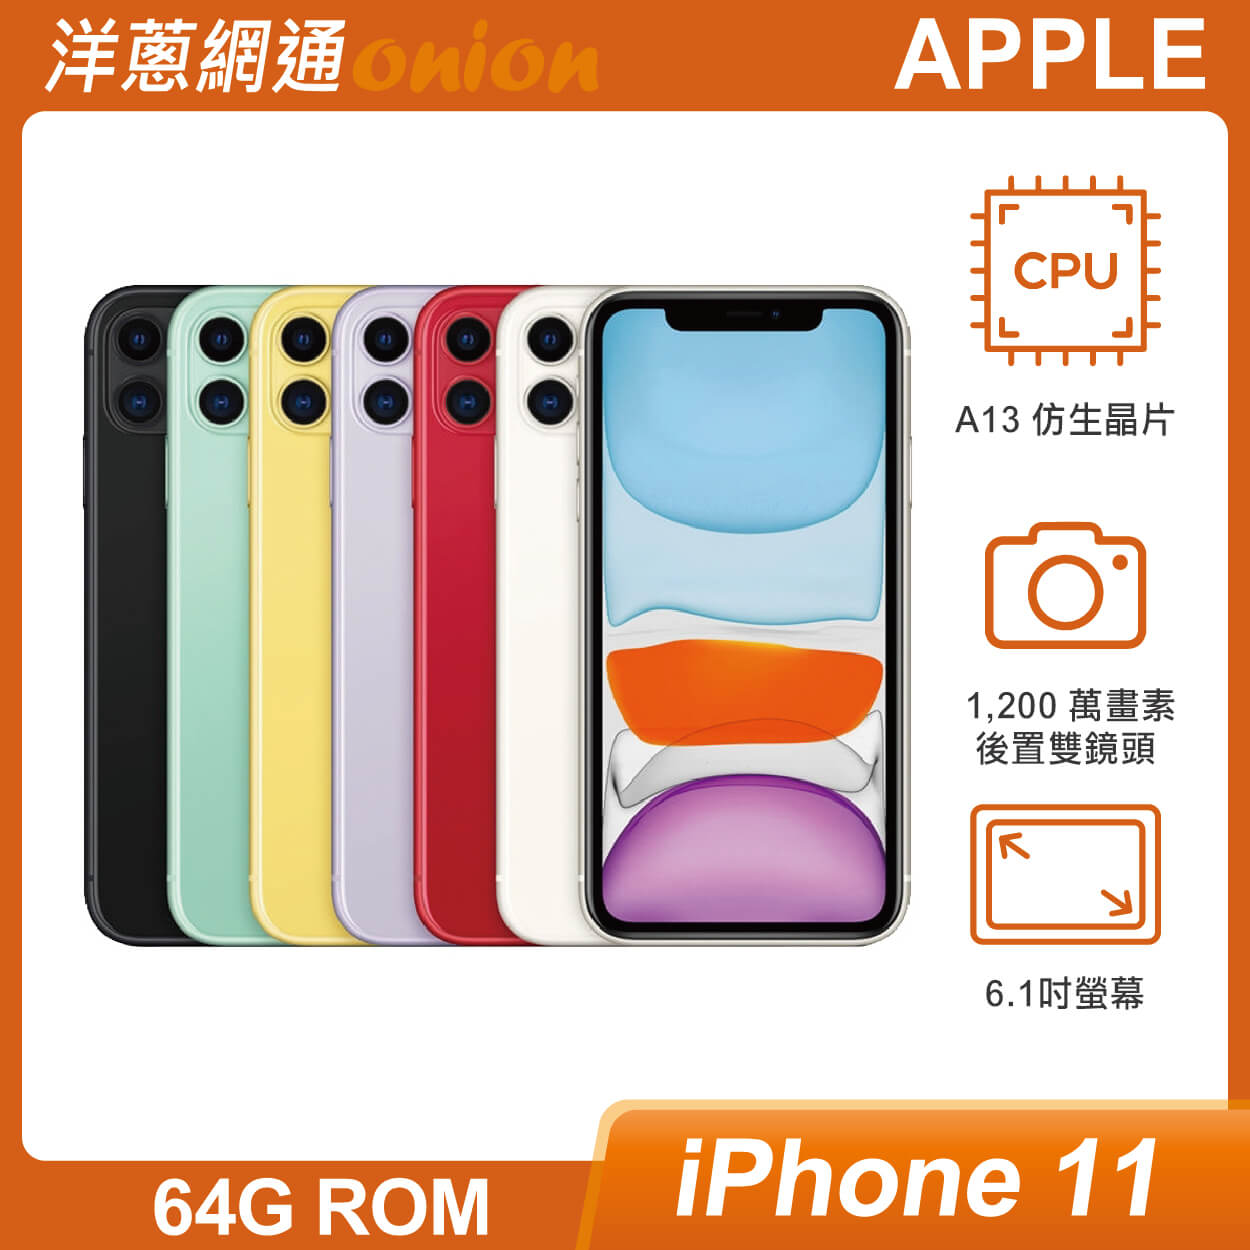 Apple iPhone 11 64G